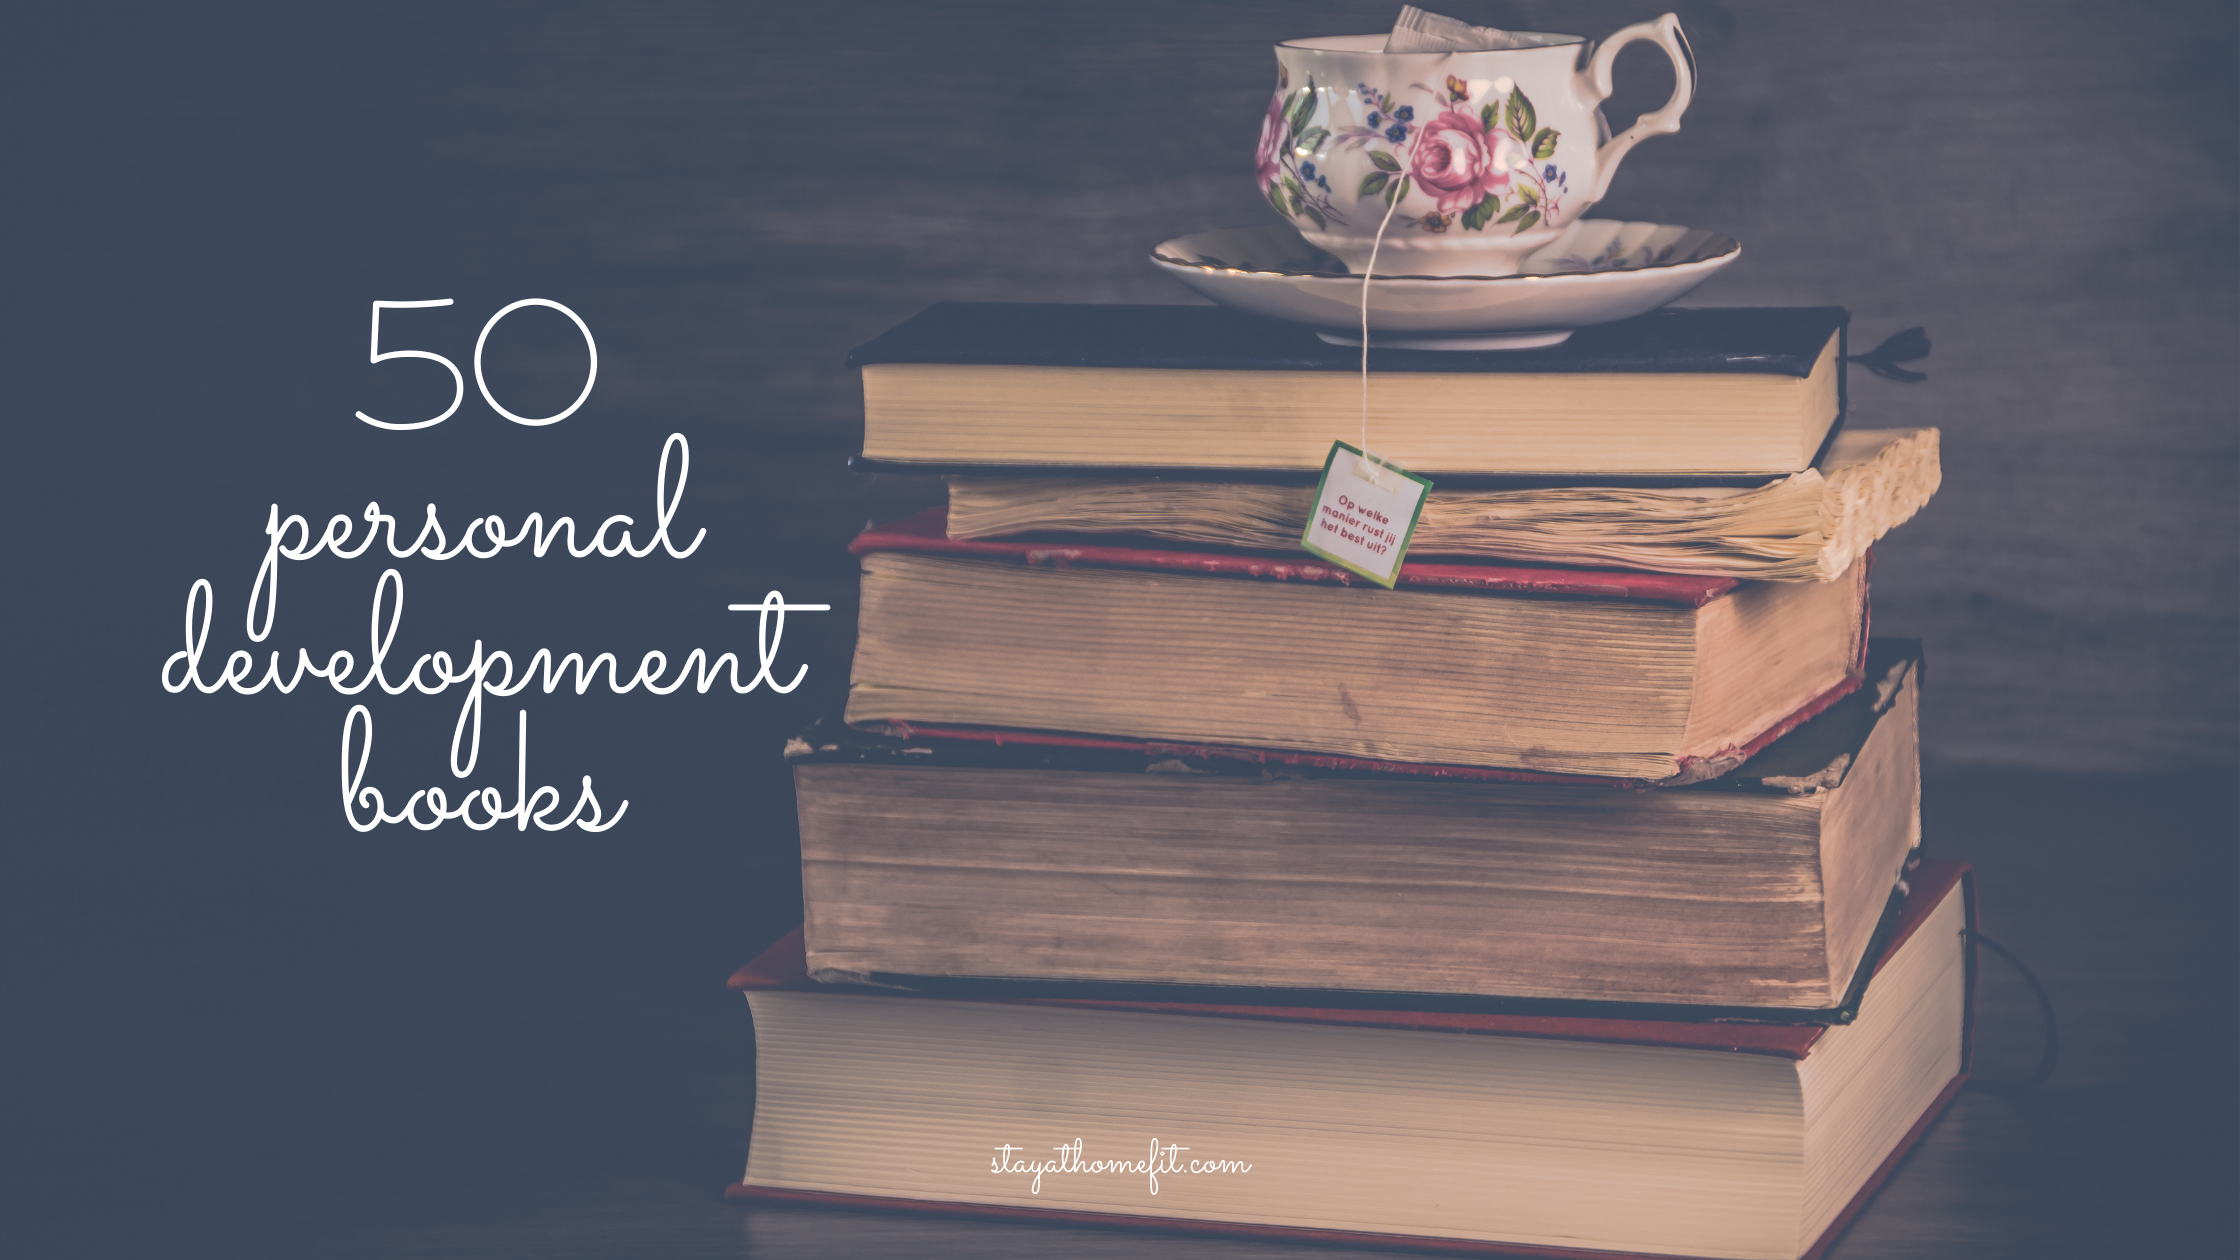 Blog title: 50 Personal Development Books